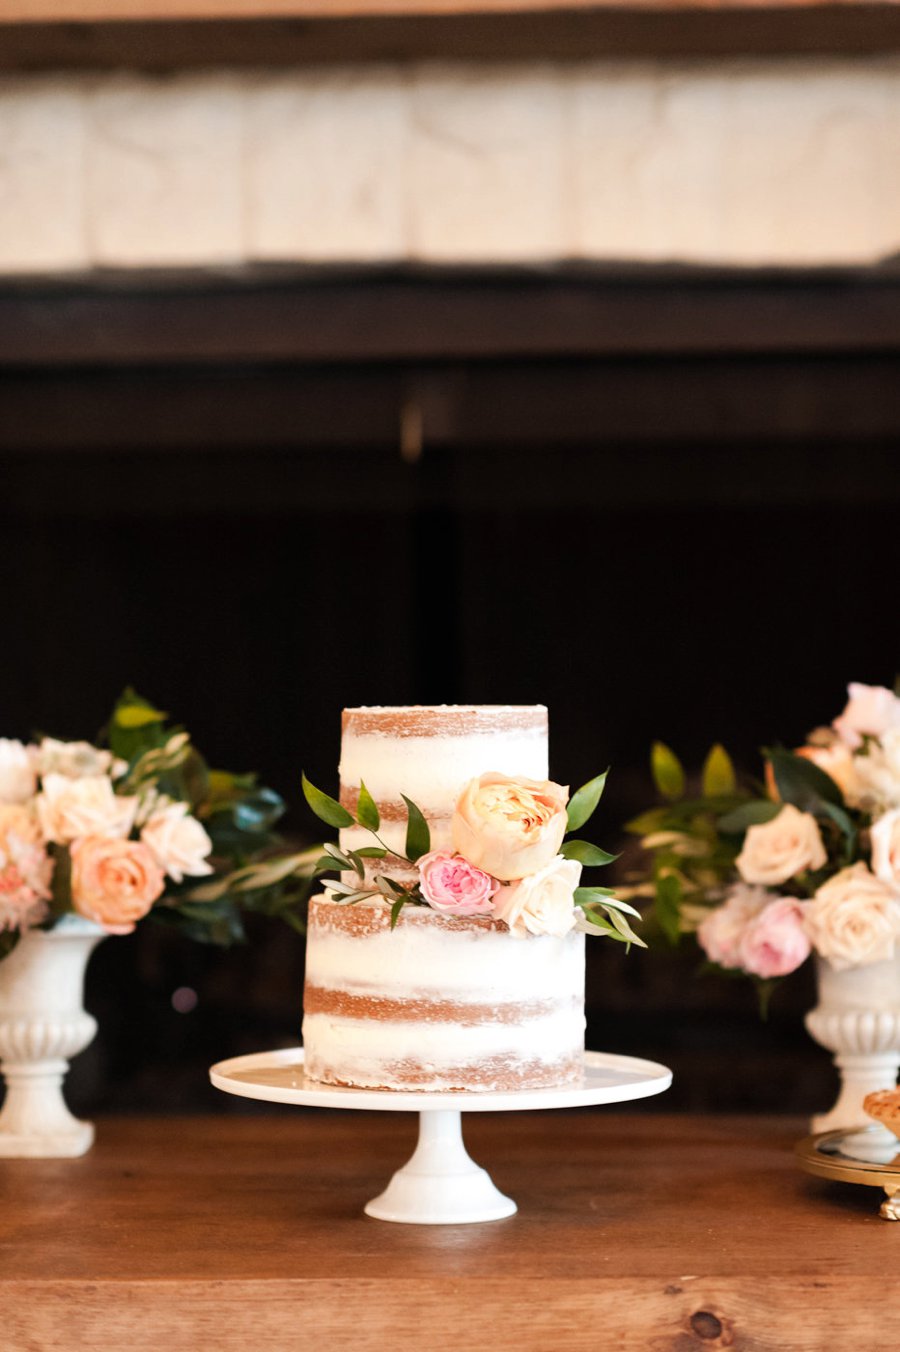 Peach & White Elegant Rustic Vineyard Wedding Ideas via TheELD.com